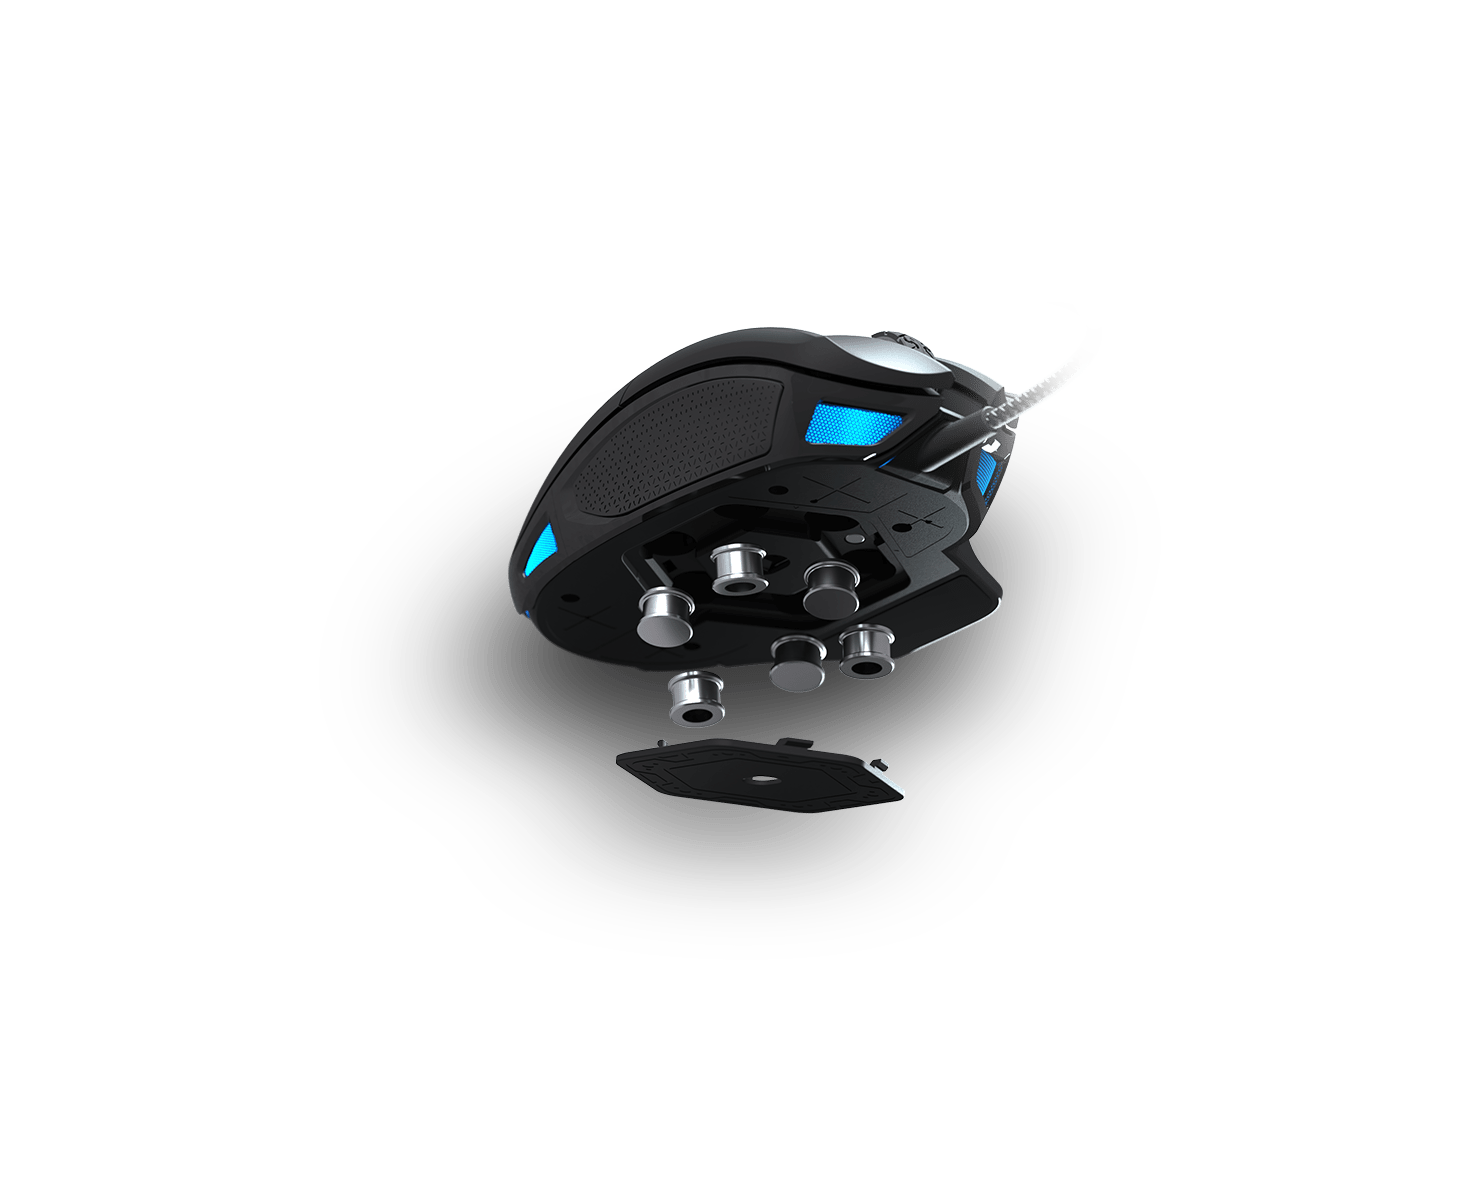 NIGHTSWORD RGB Tunable FPS/MOBA Gaming Mouse